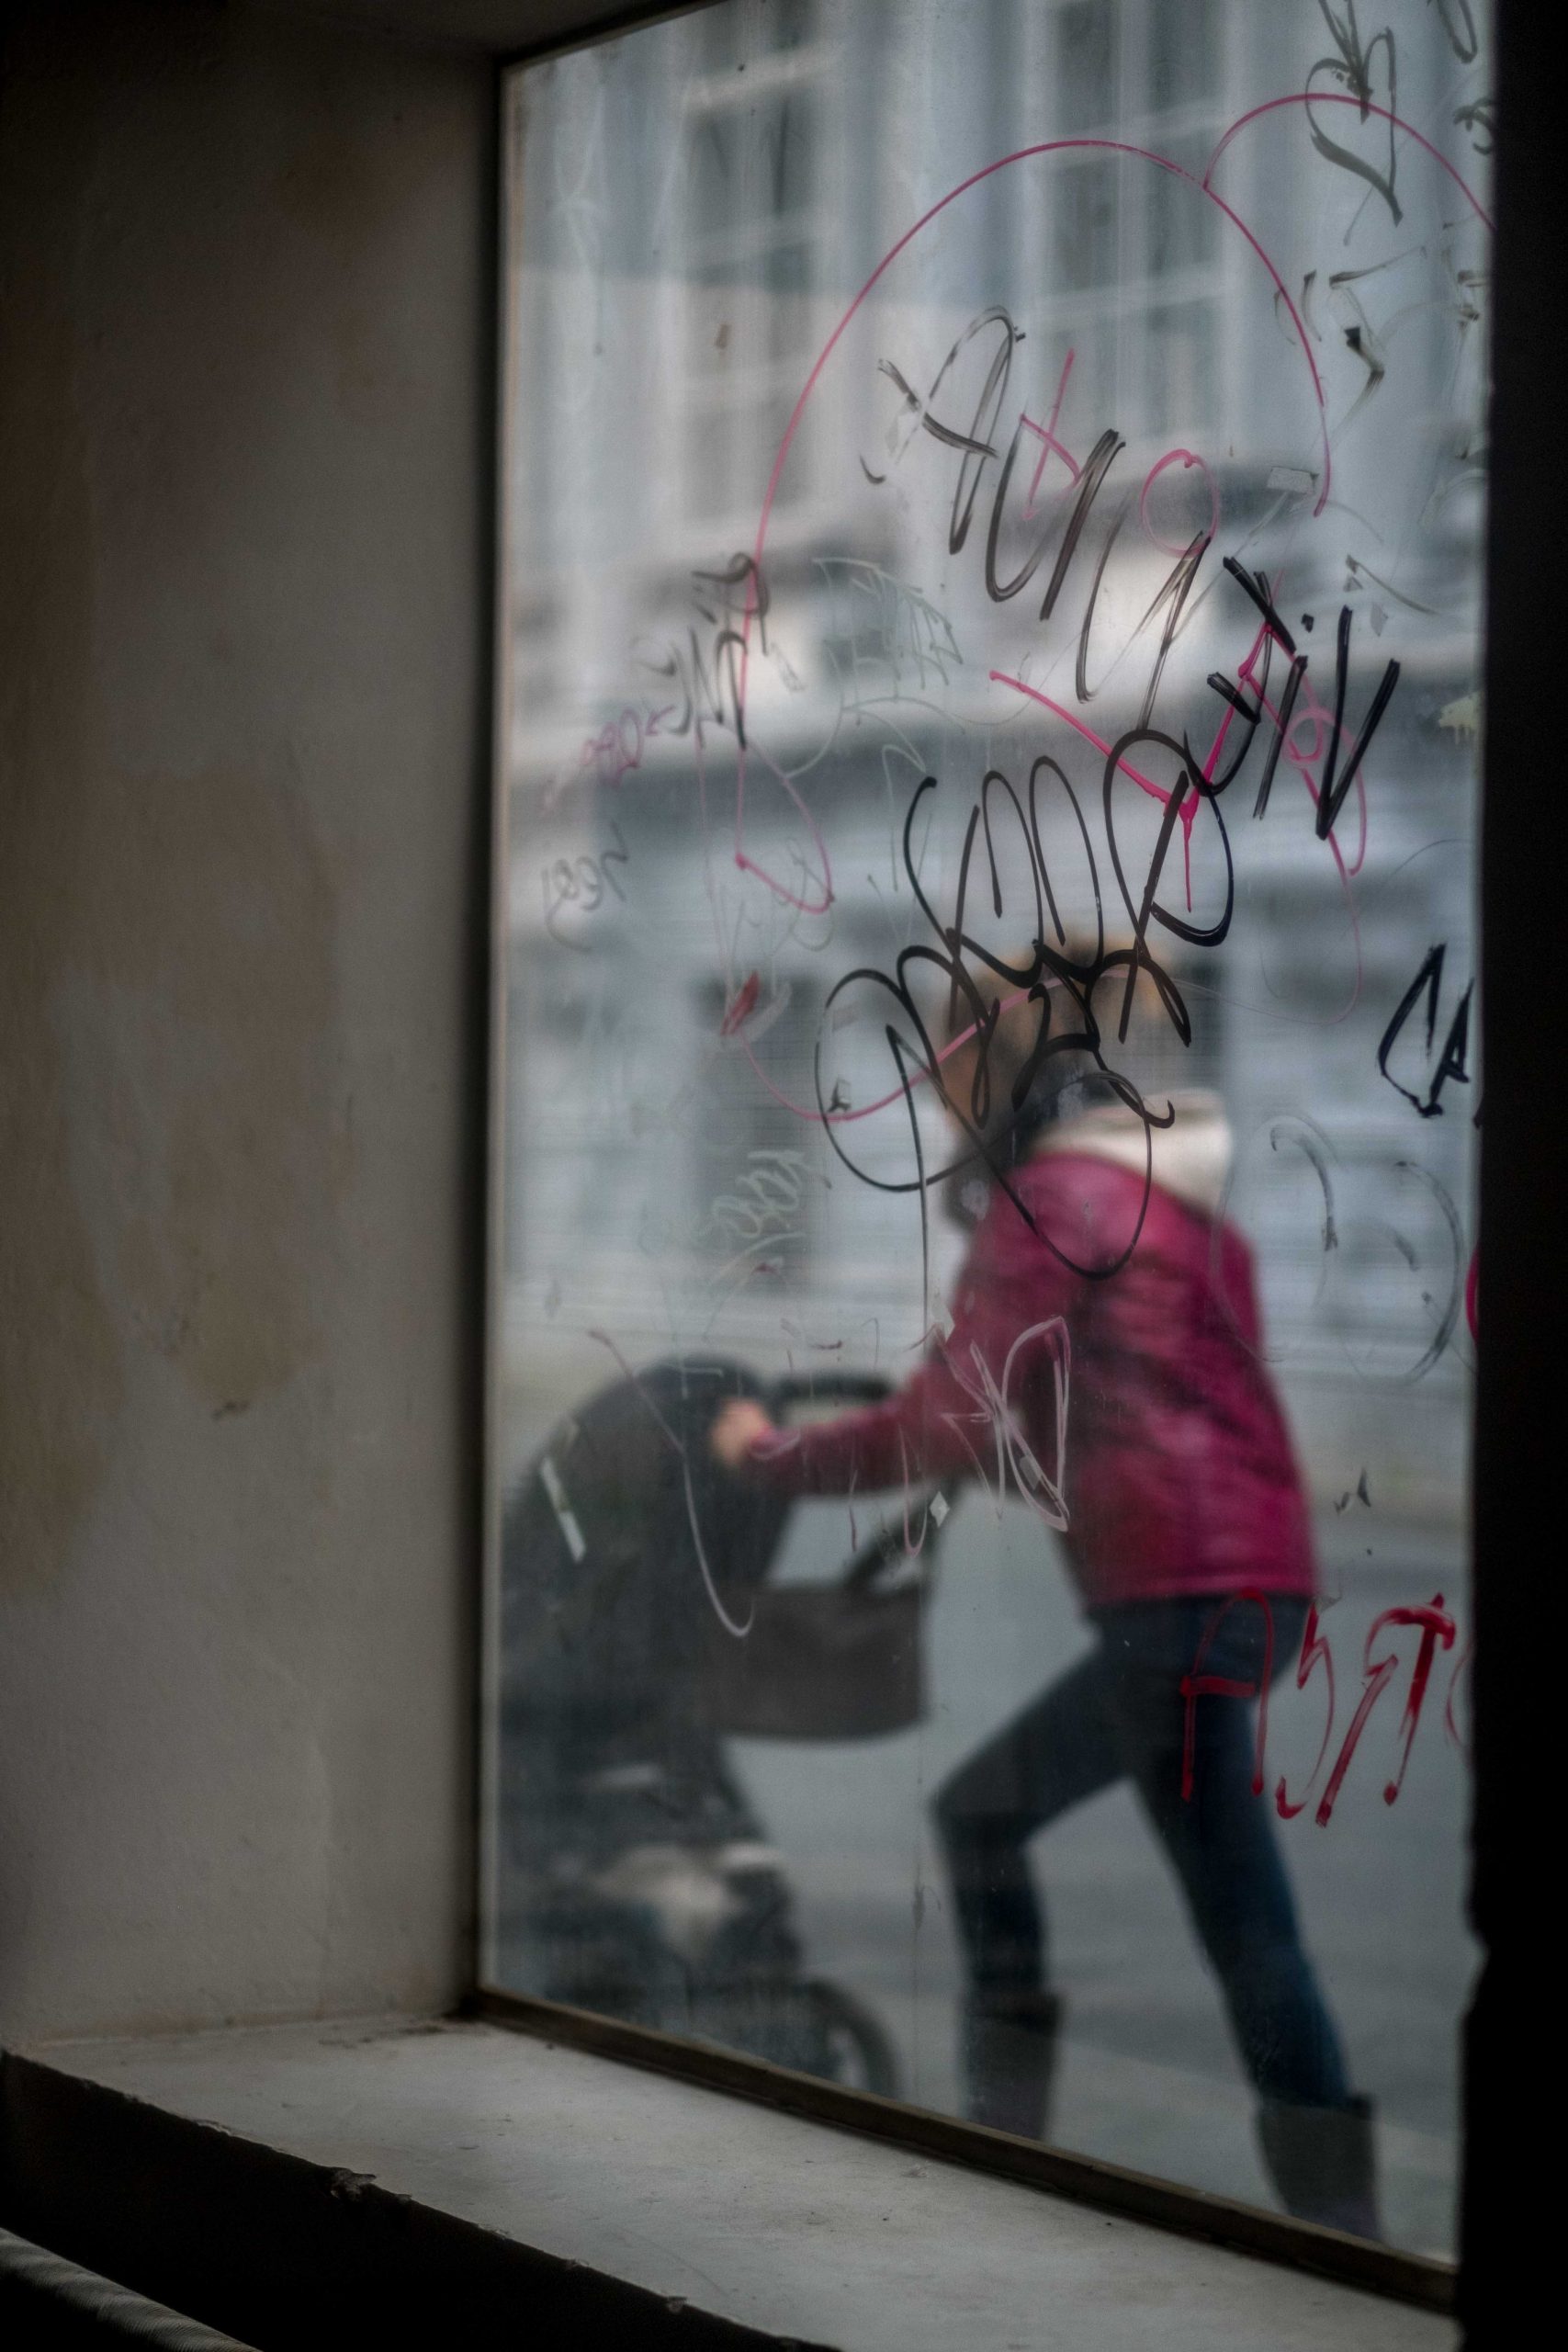 A woman can be seen pushesing a pram through a graffitied window